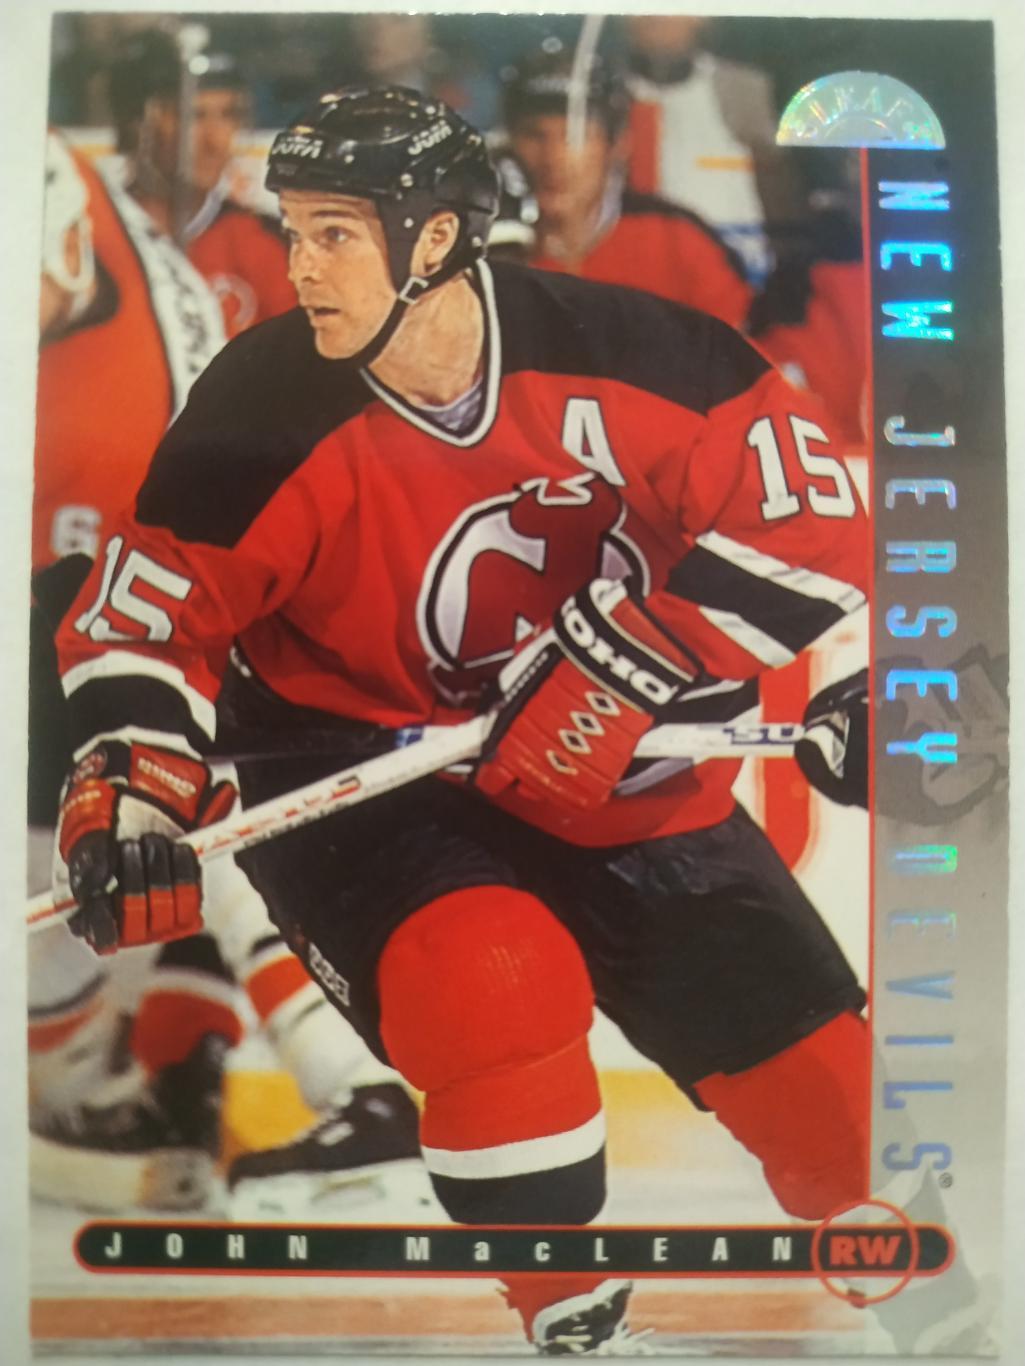 ХОККЕЙ КАРТОЧКА НХЛ DONRUSS LEAF 1995-96 JOHN MACLEAN NEW JERSEY DEVILS #176